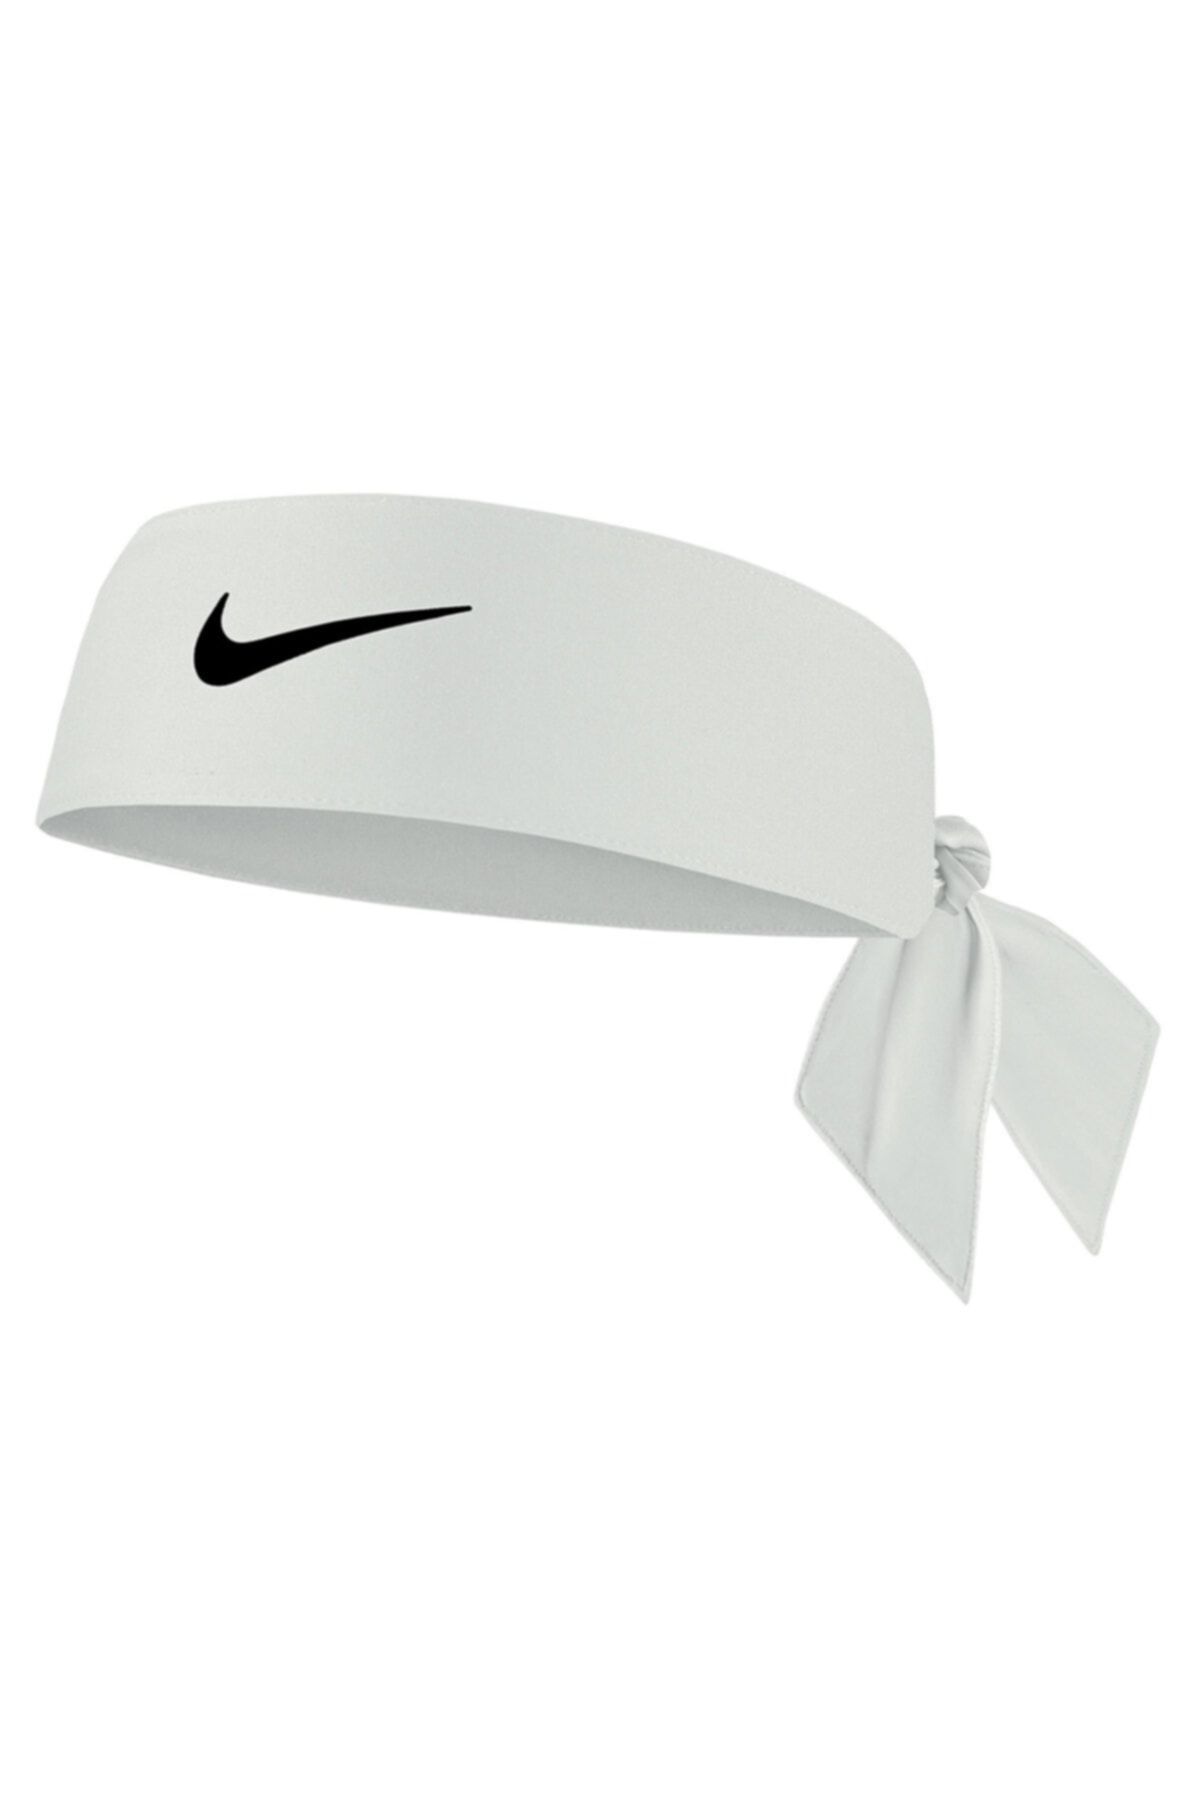 Nike Dri-fit Unisex Beyaz Saç Bandı N.100.2146.101.os